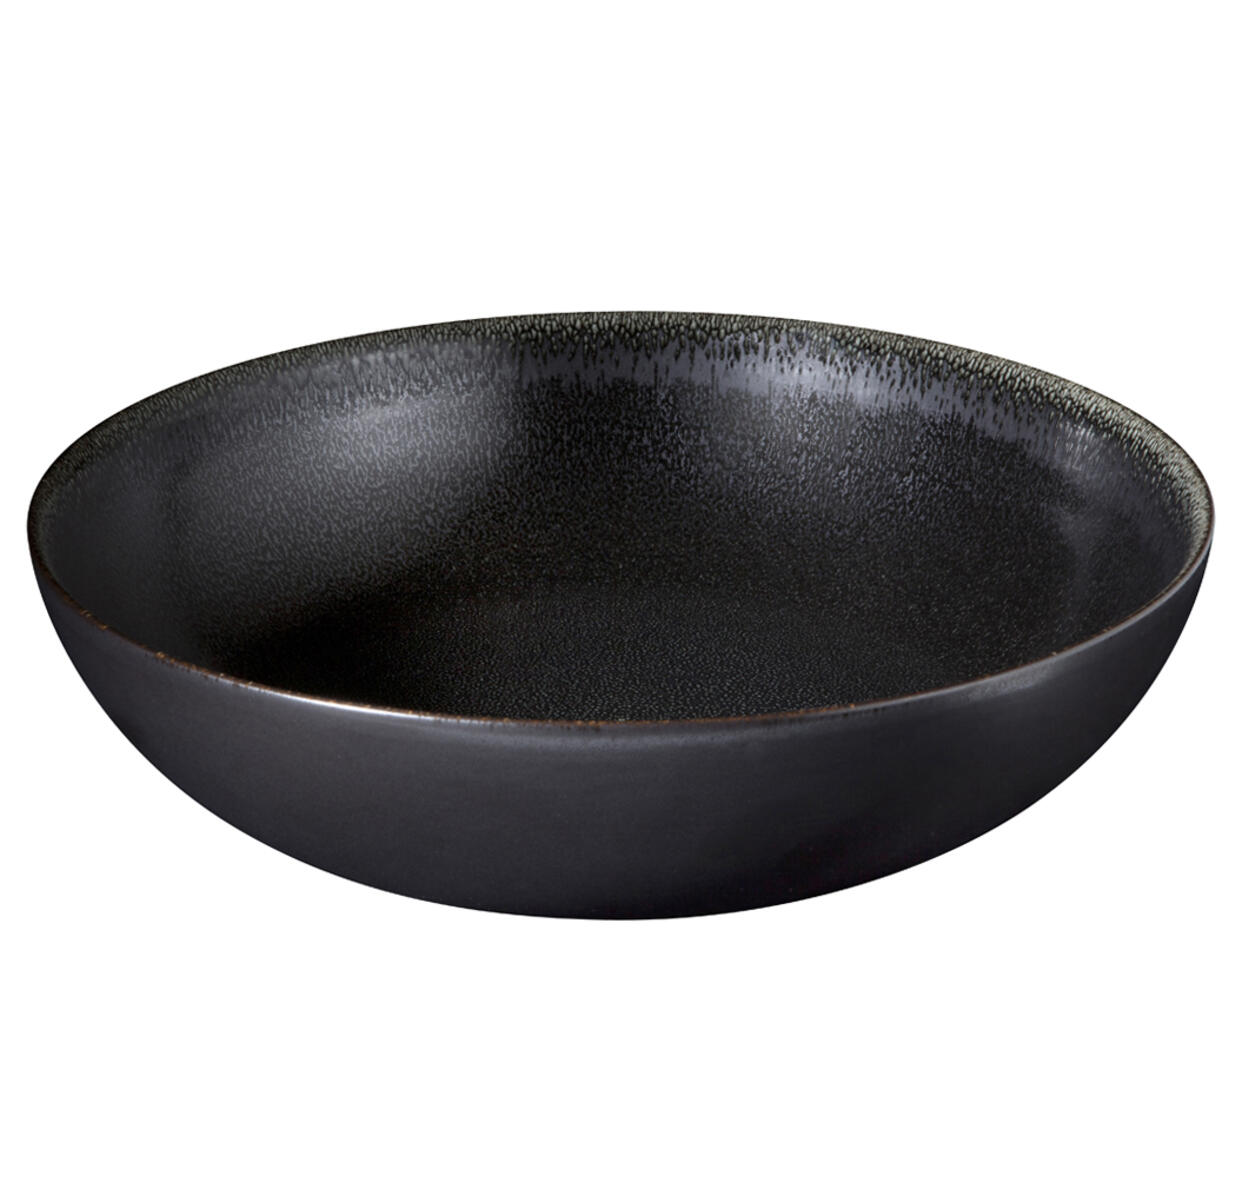 serve bowl tourron celeste ceramic manufacturer